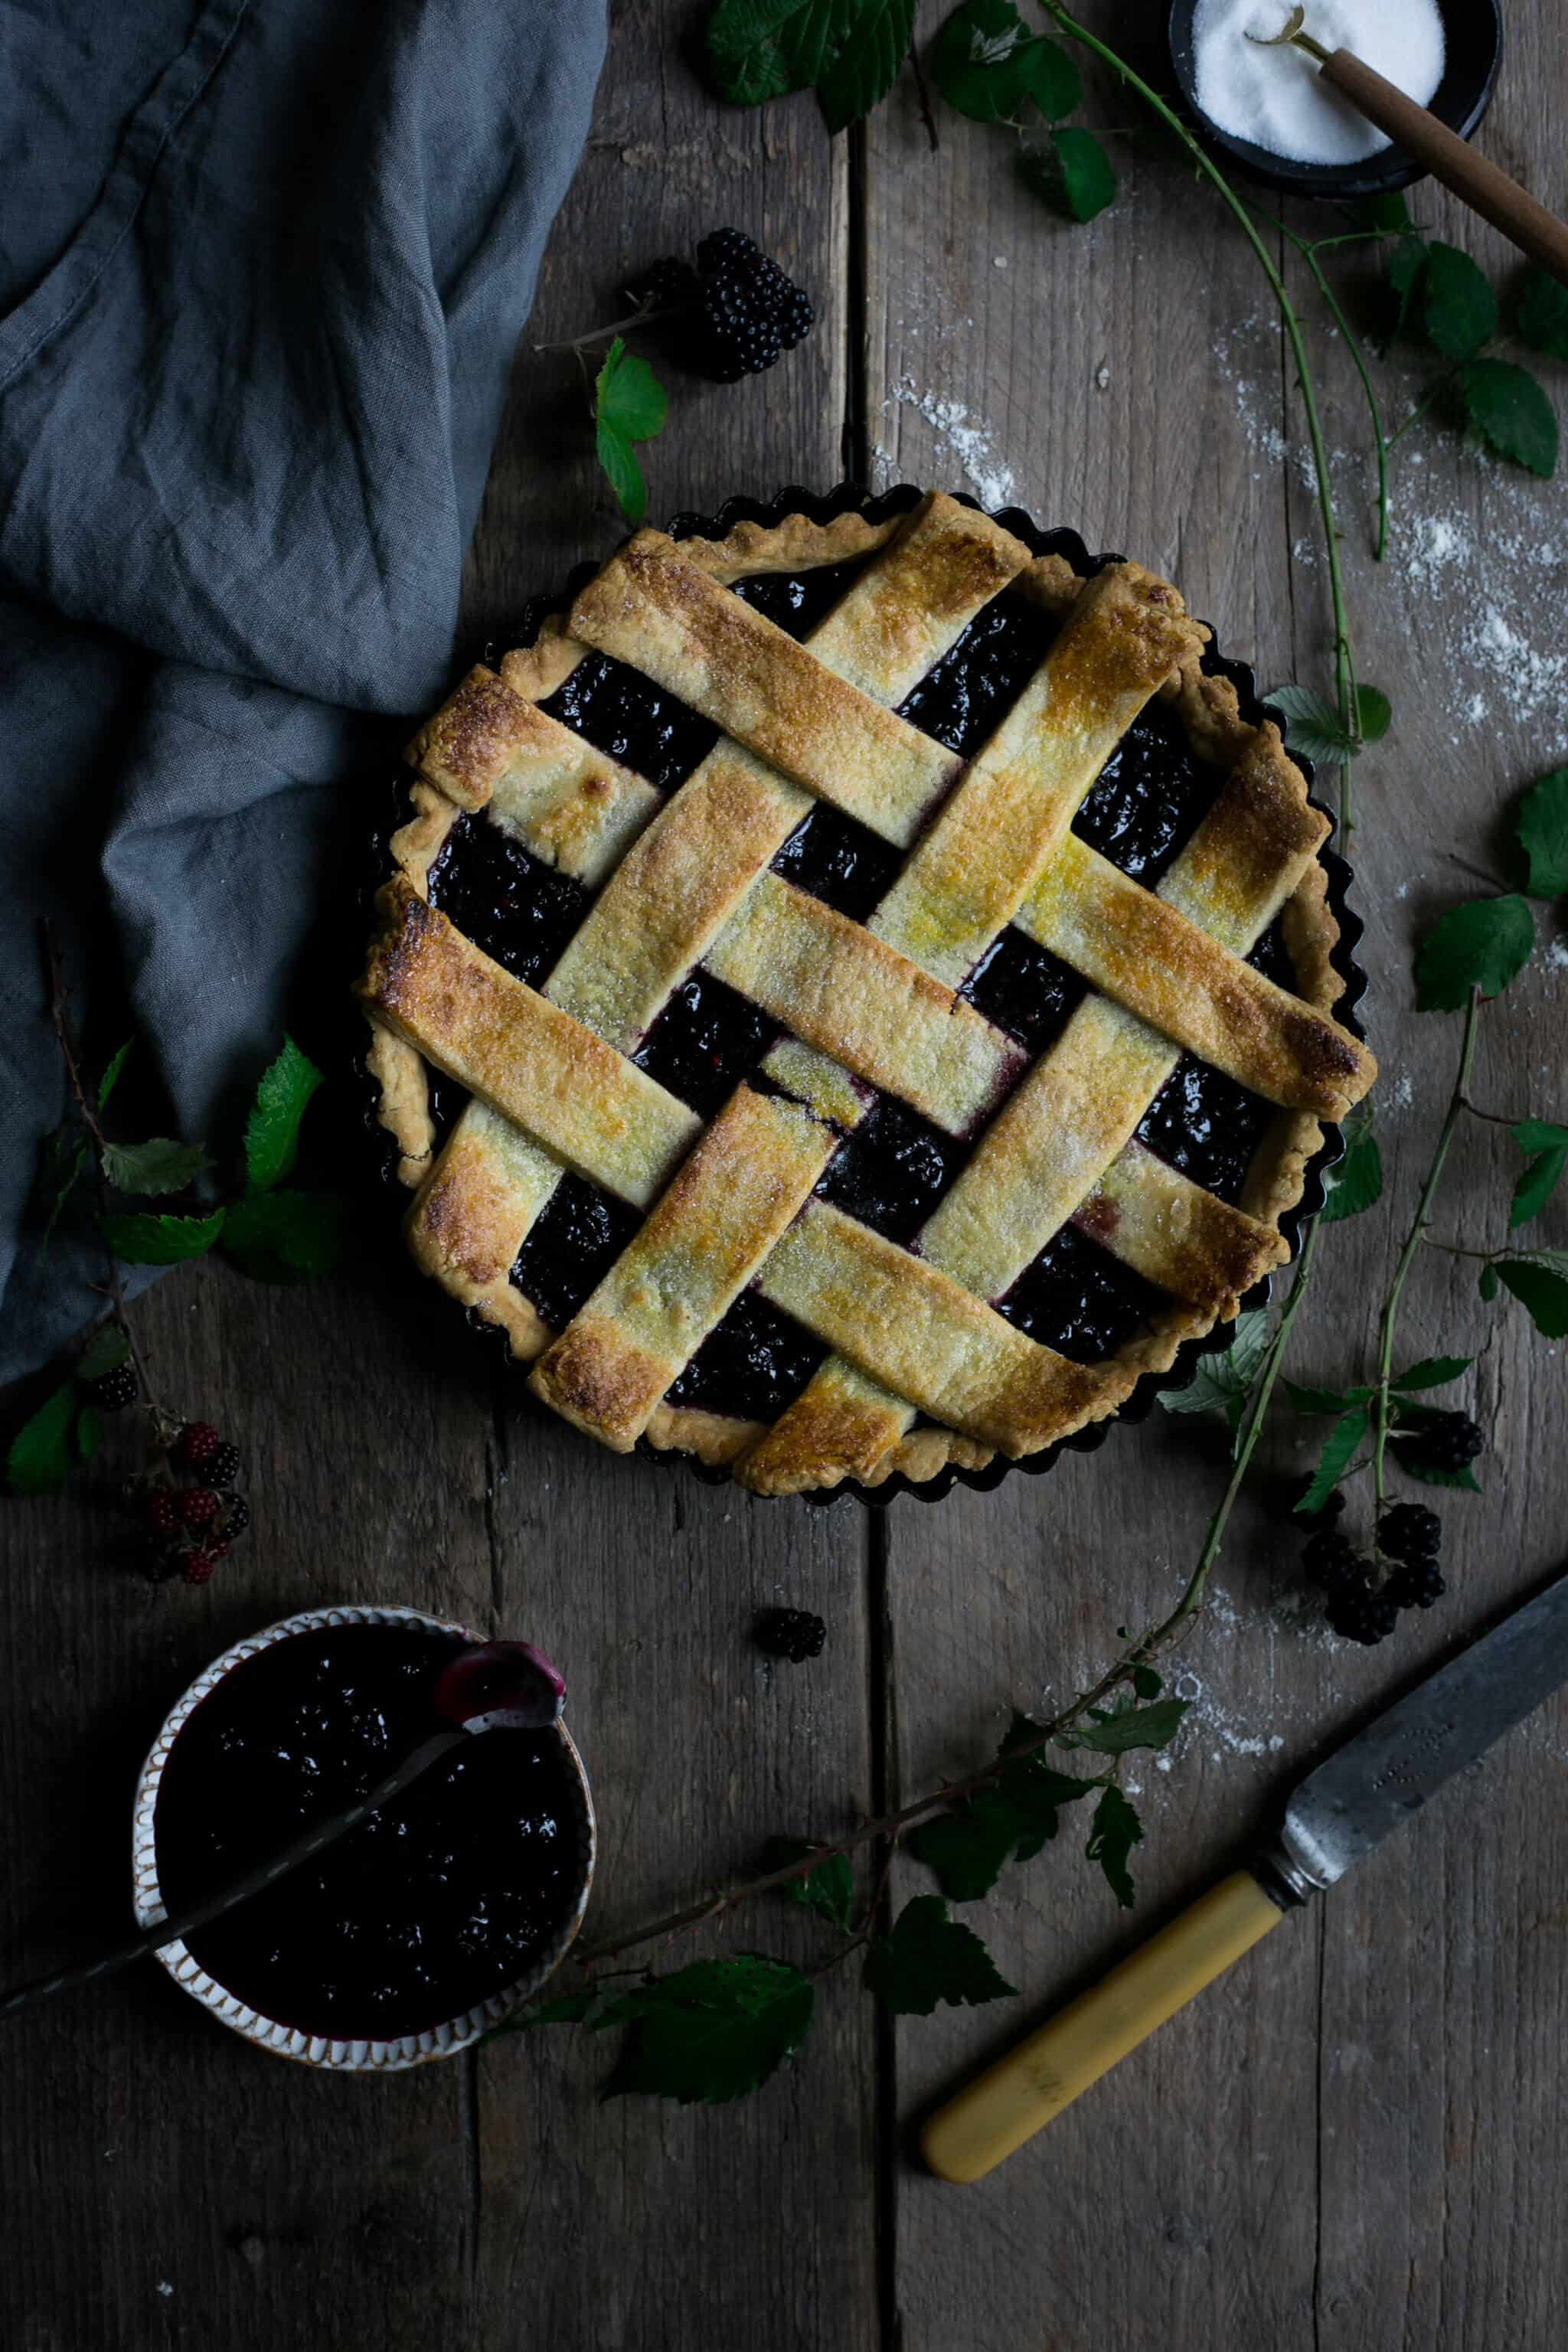 Homemade blackberry and lattice tart | via @annabanana.co